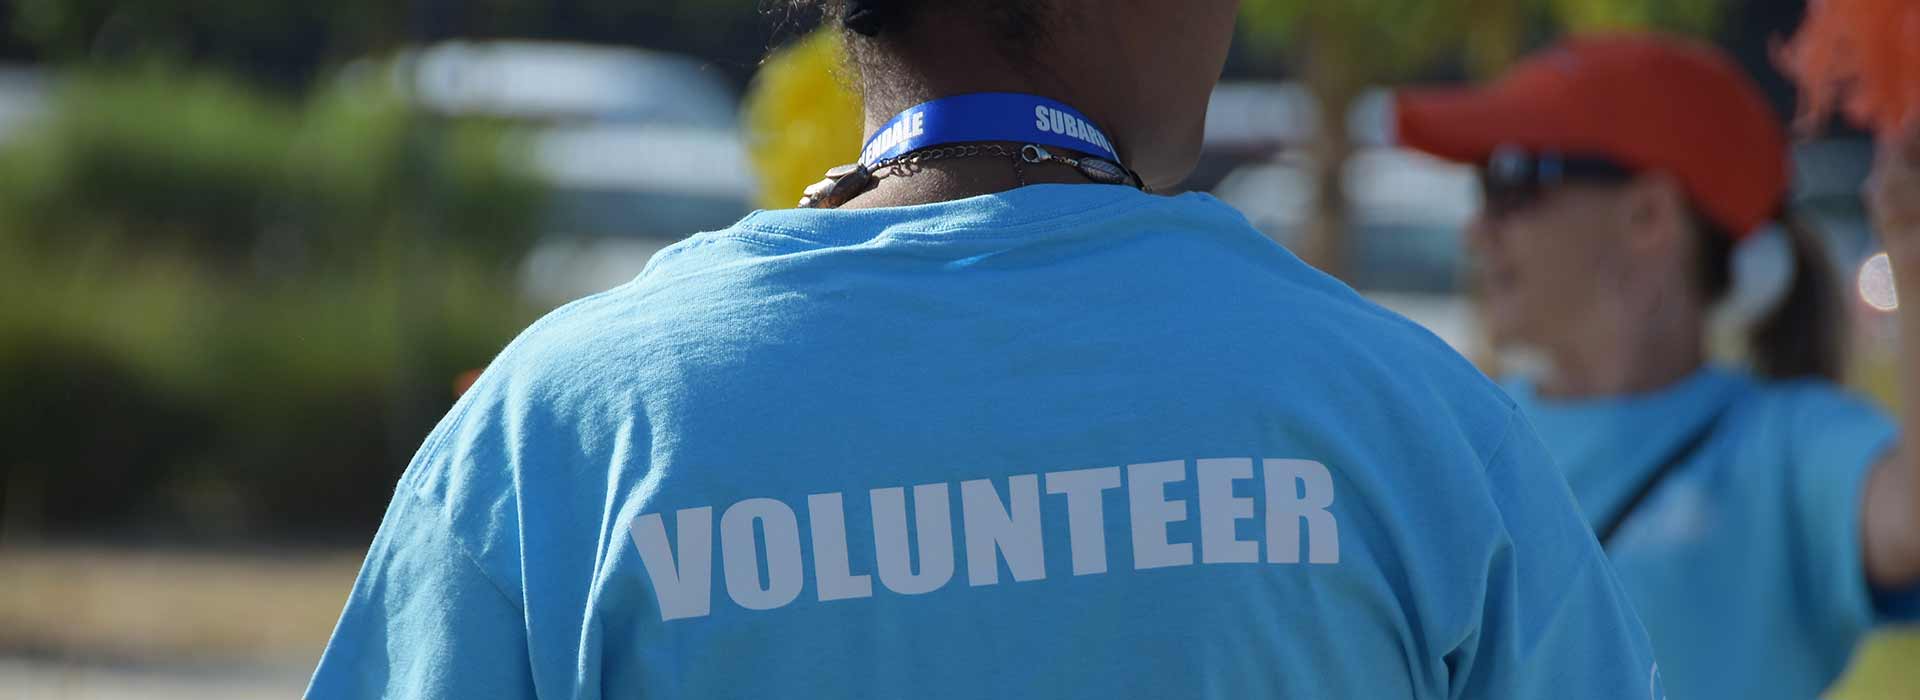 volunteer blue shirt